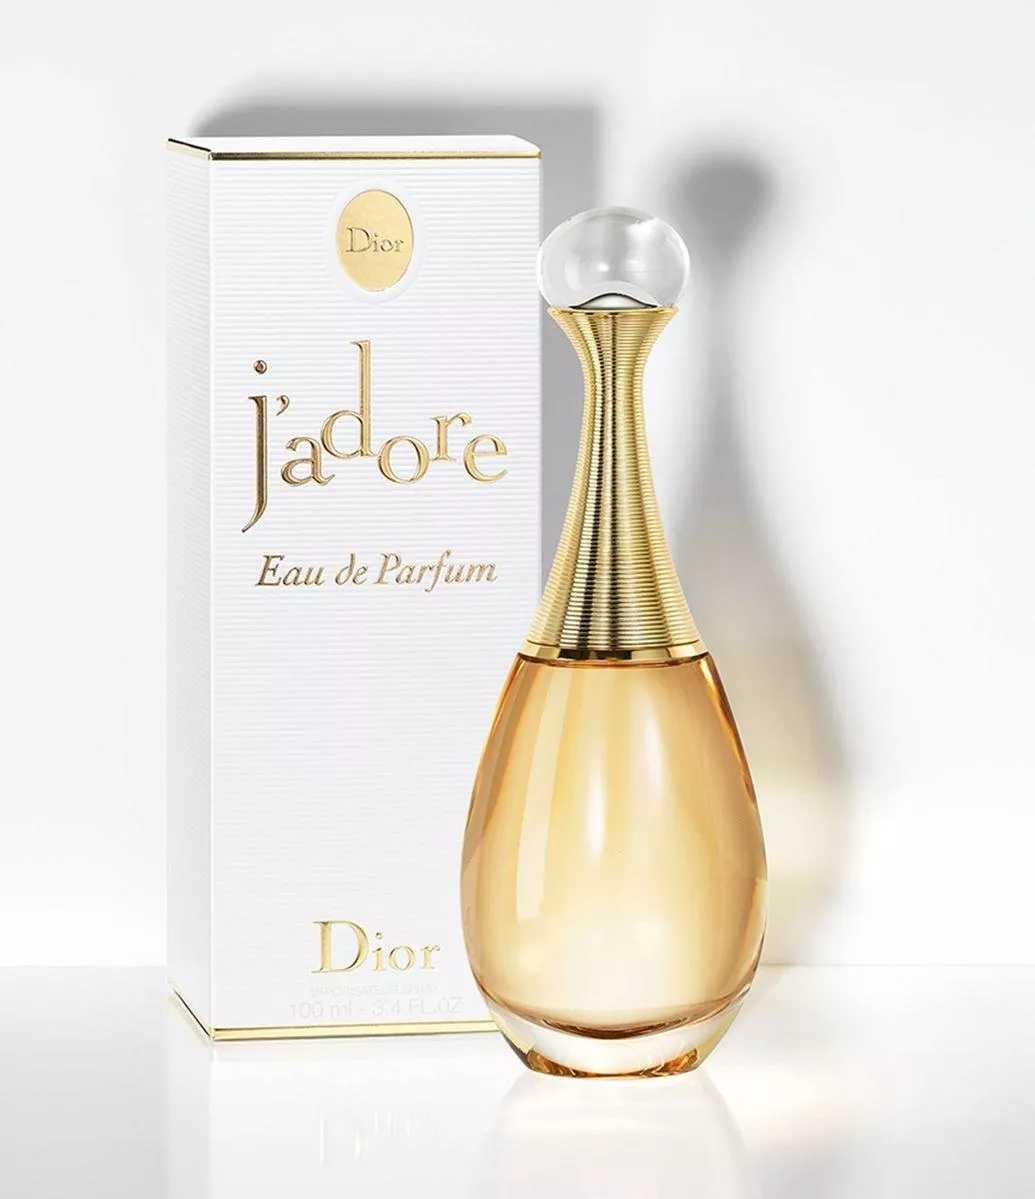 Tercera imagen para búsqueda de jadore perfume